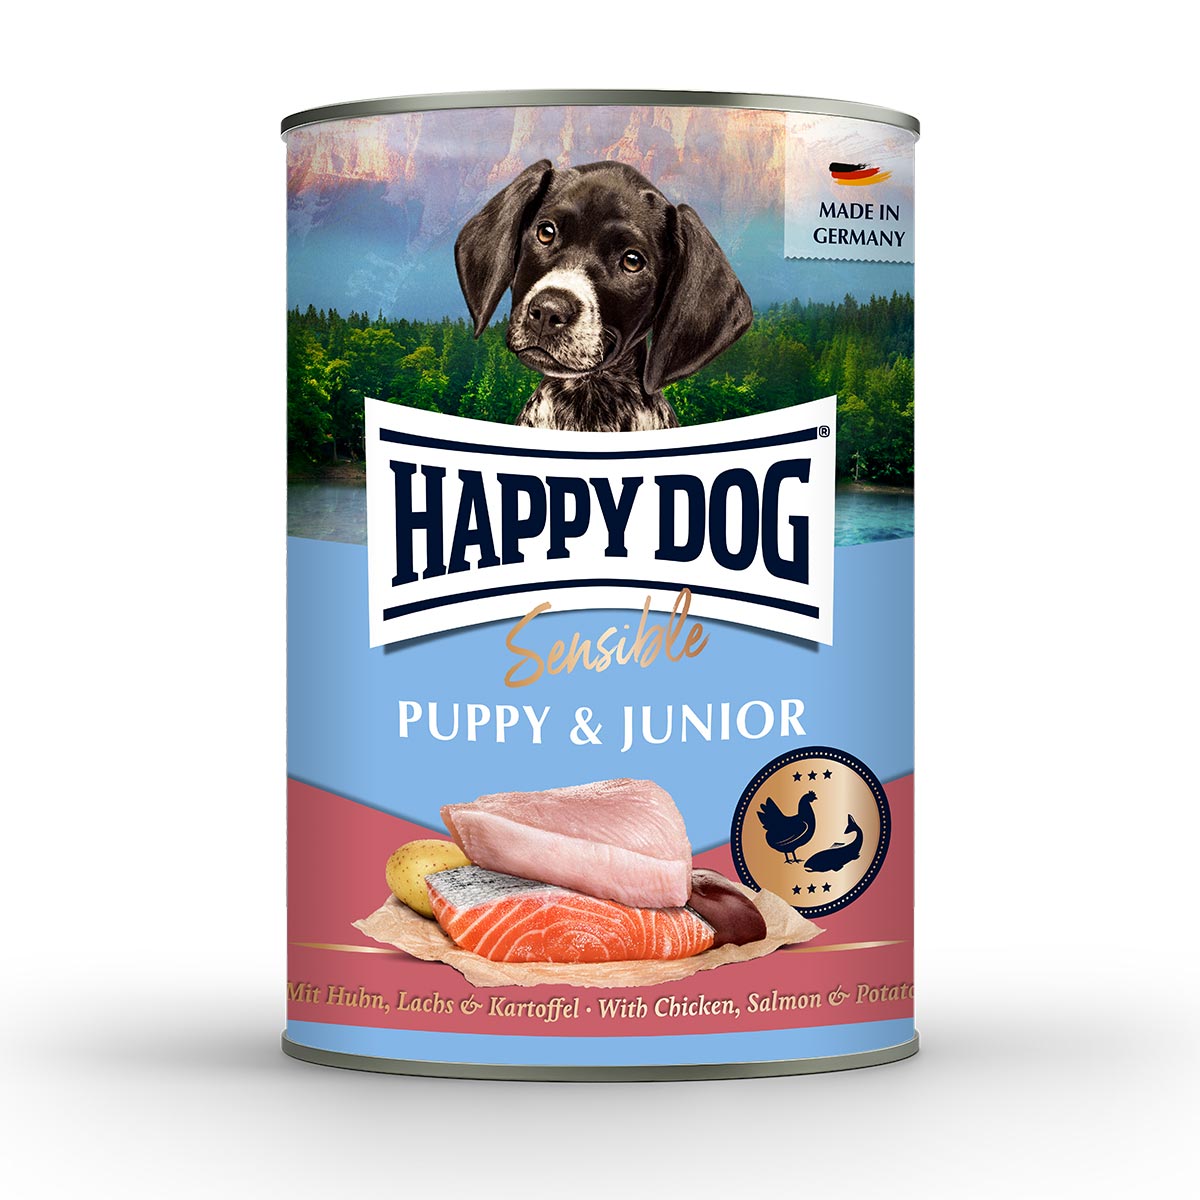 Happy Dog Sensible Puppy Huhn, Lachs & Kartoffel Dose 6x400g von Happy Dog